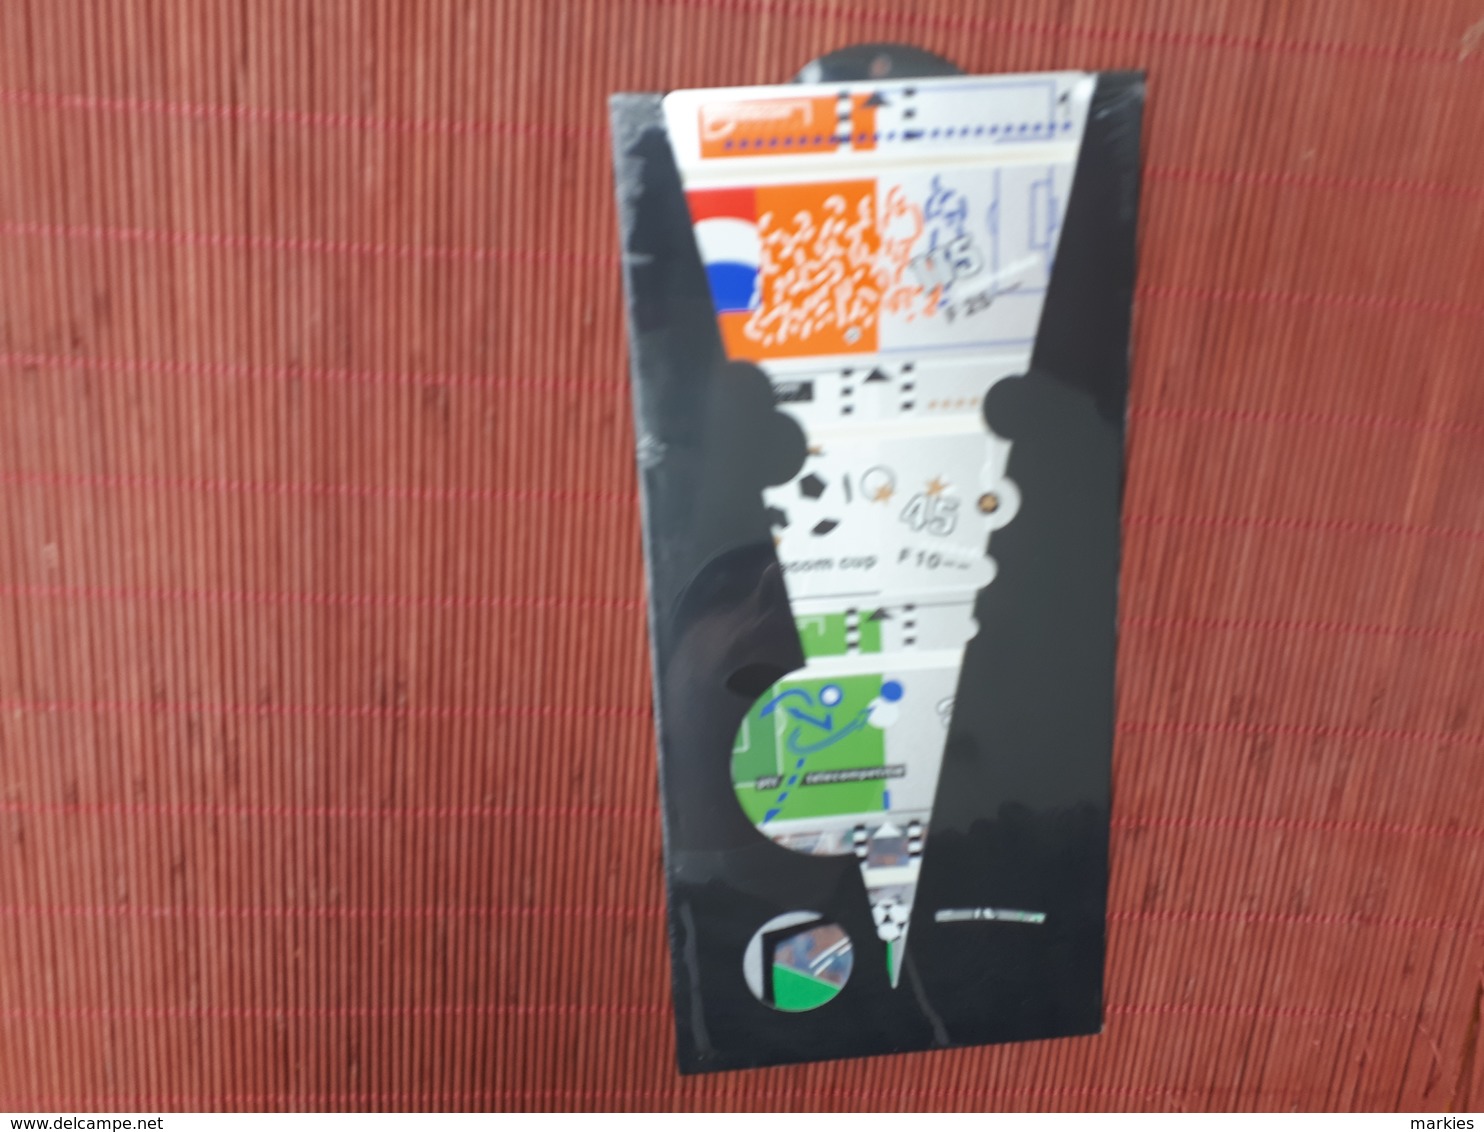 Set 4 Phonecards Football Netherlands With Folder (Mint,Neuve) Rare - Publiques